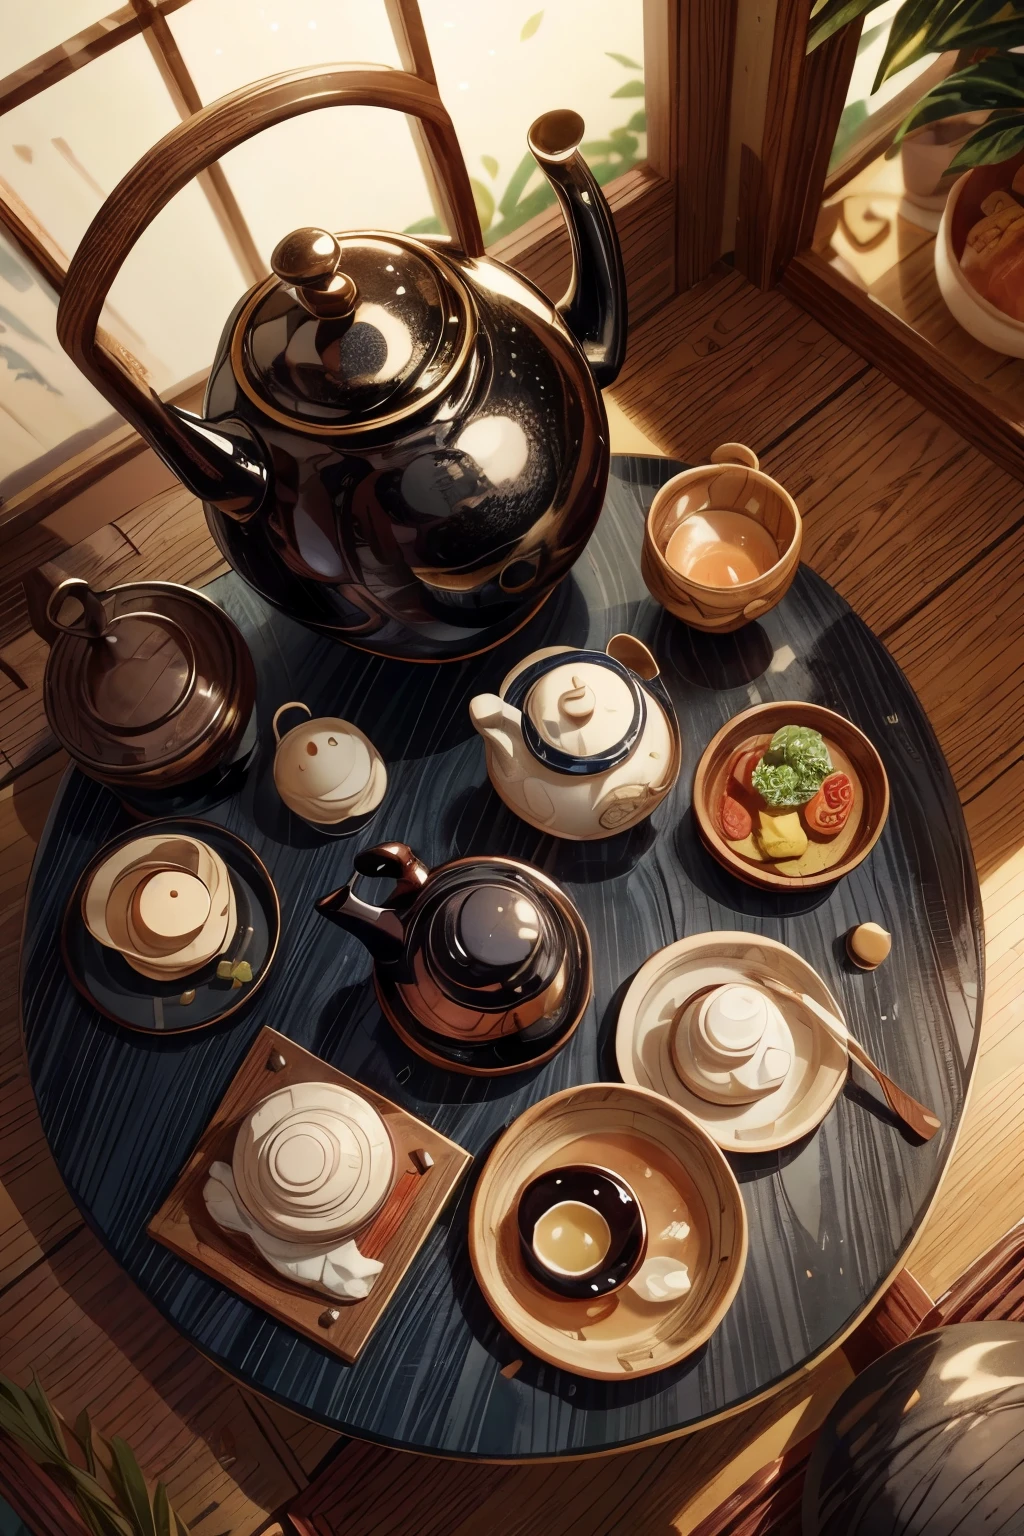 On the bowl is placed a tetera, inspirado en Sesshū Toyo, pava, large black pava on the hearth, tetera, tetera, tetera, precioso juego de té de porcelana, tetera: 1, inspirado en Renzheng Doben, inspirado en el emperador Xuande, cerámica, smooth glazed cerámica